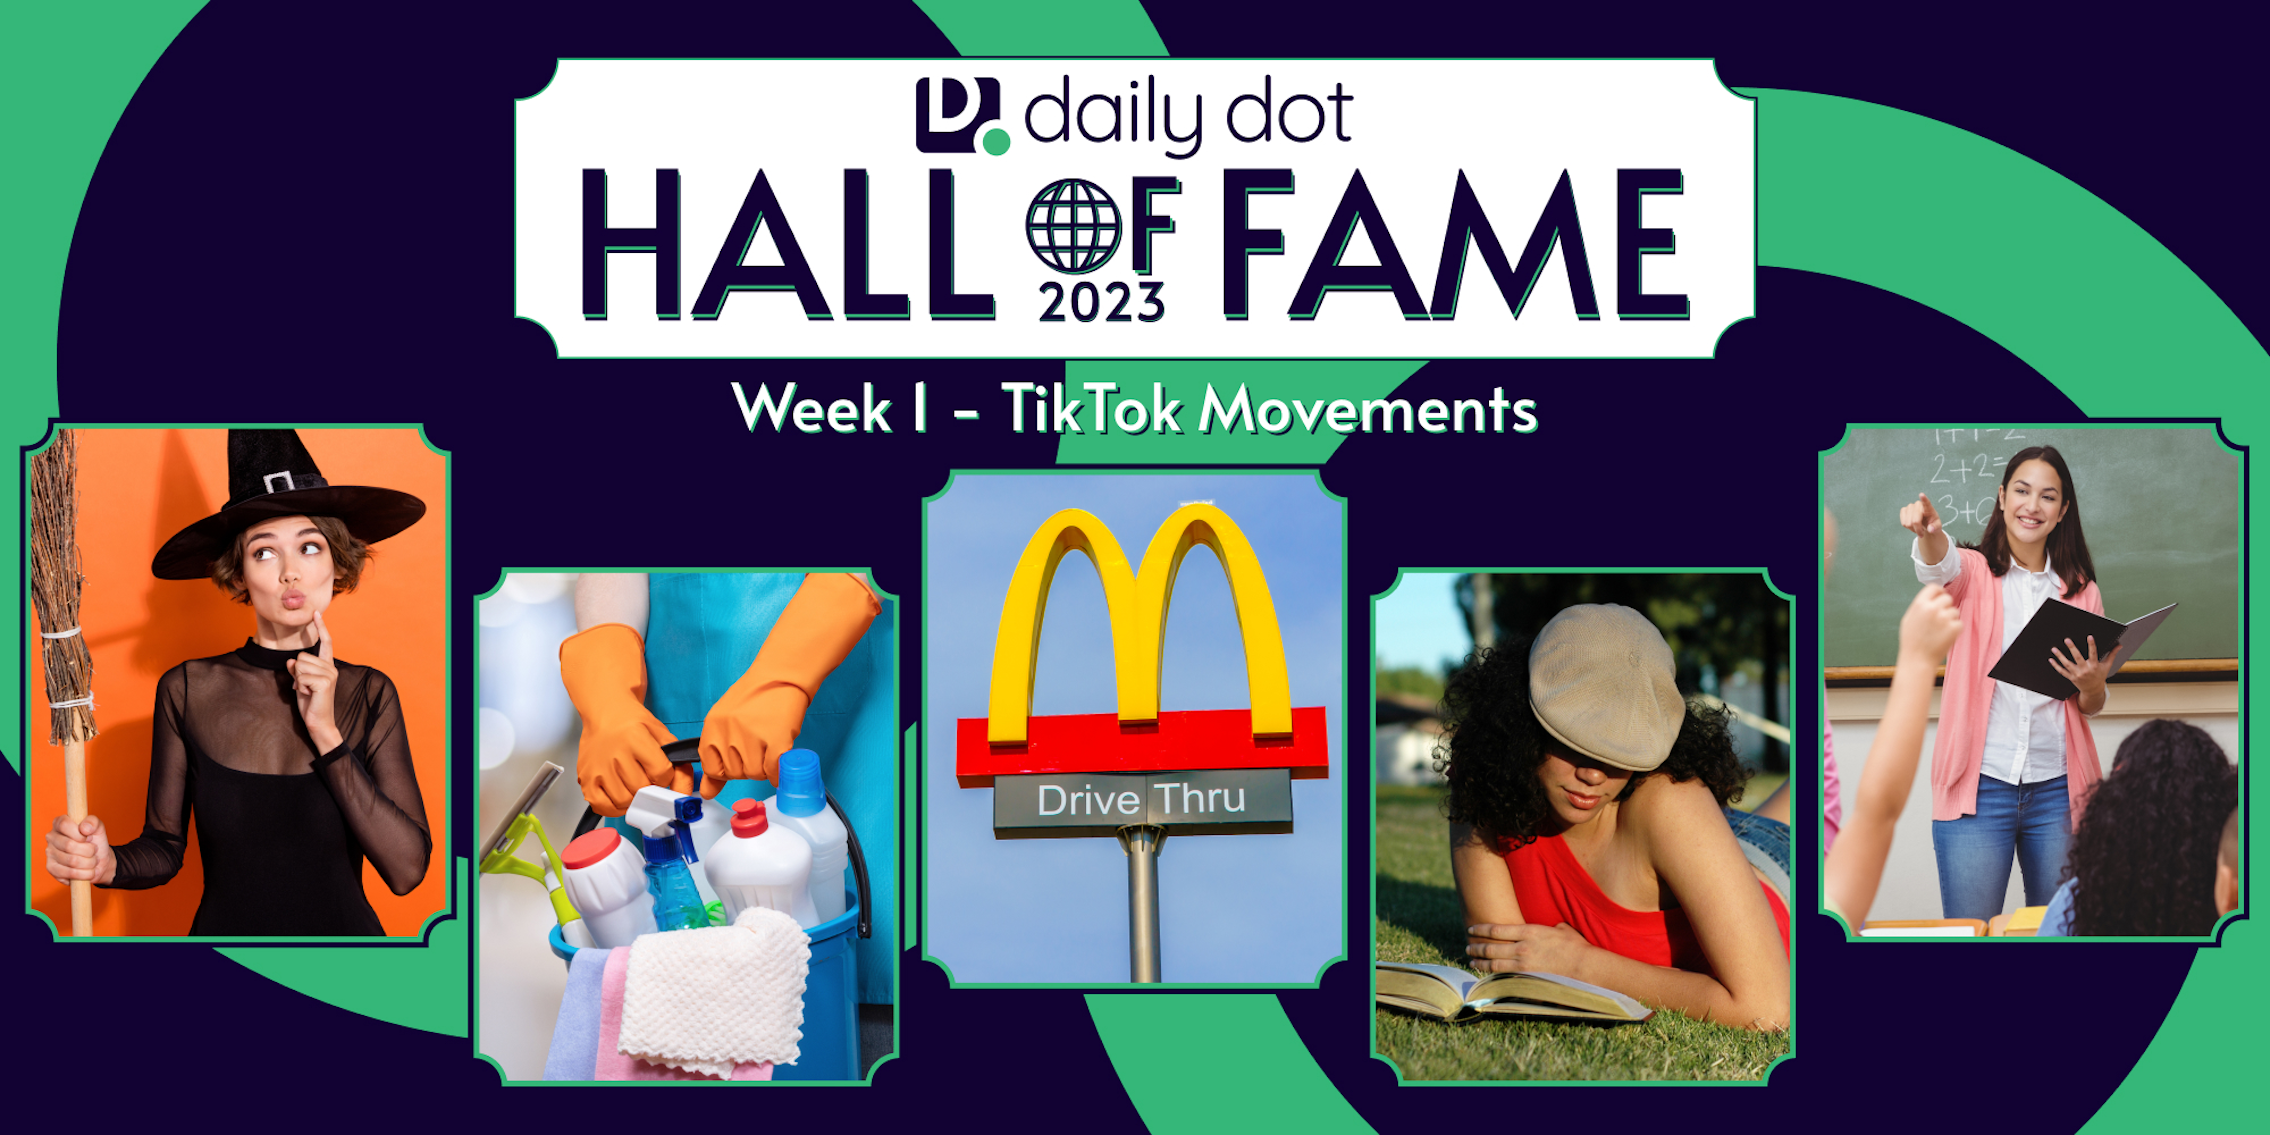 Daily Dot Hall of Fame 2023 Week 1 TikTok Movements